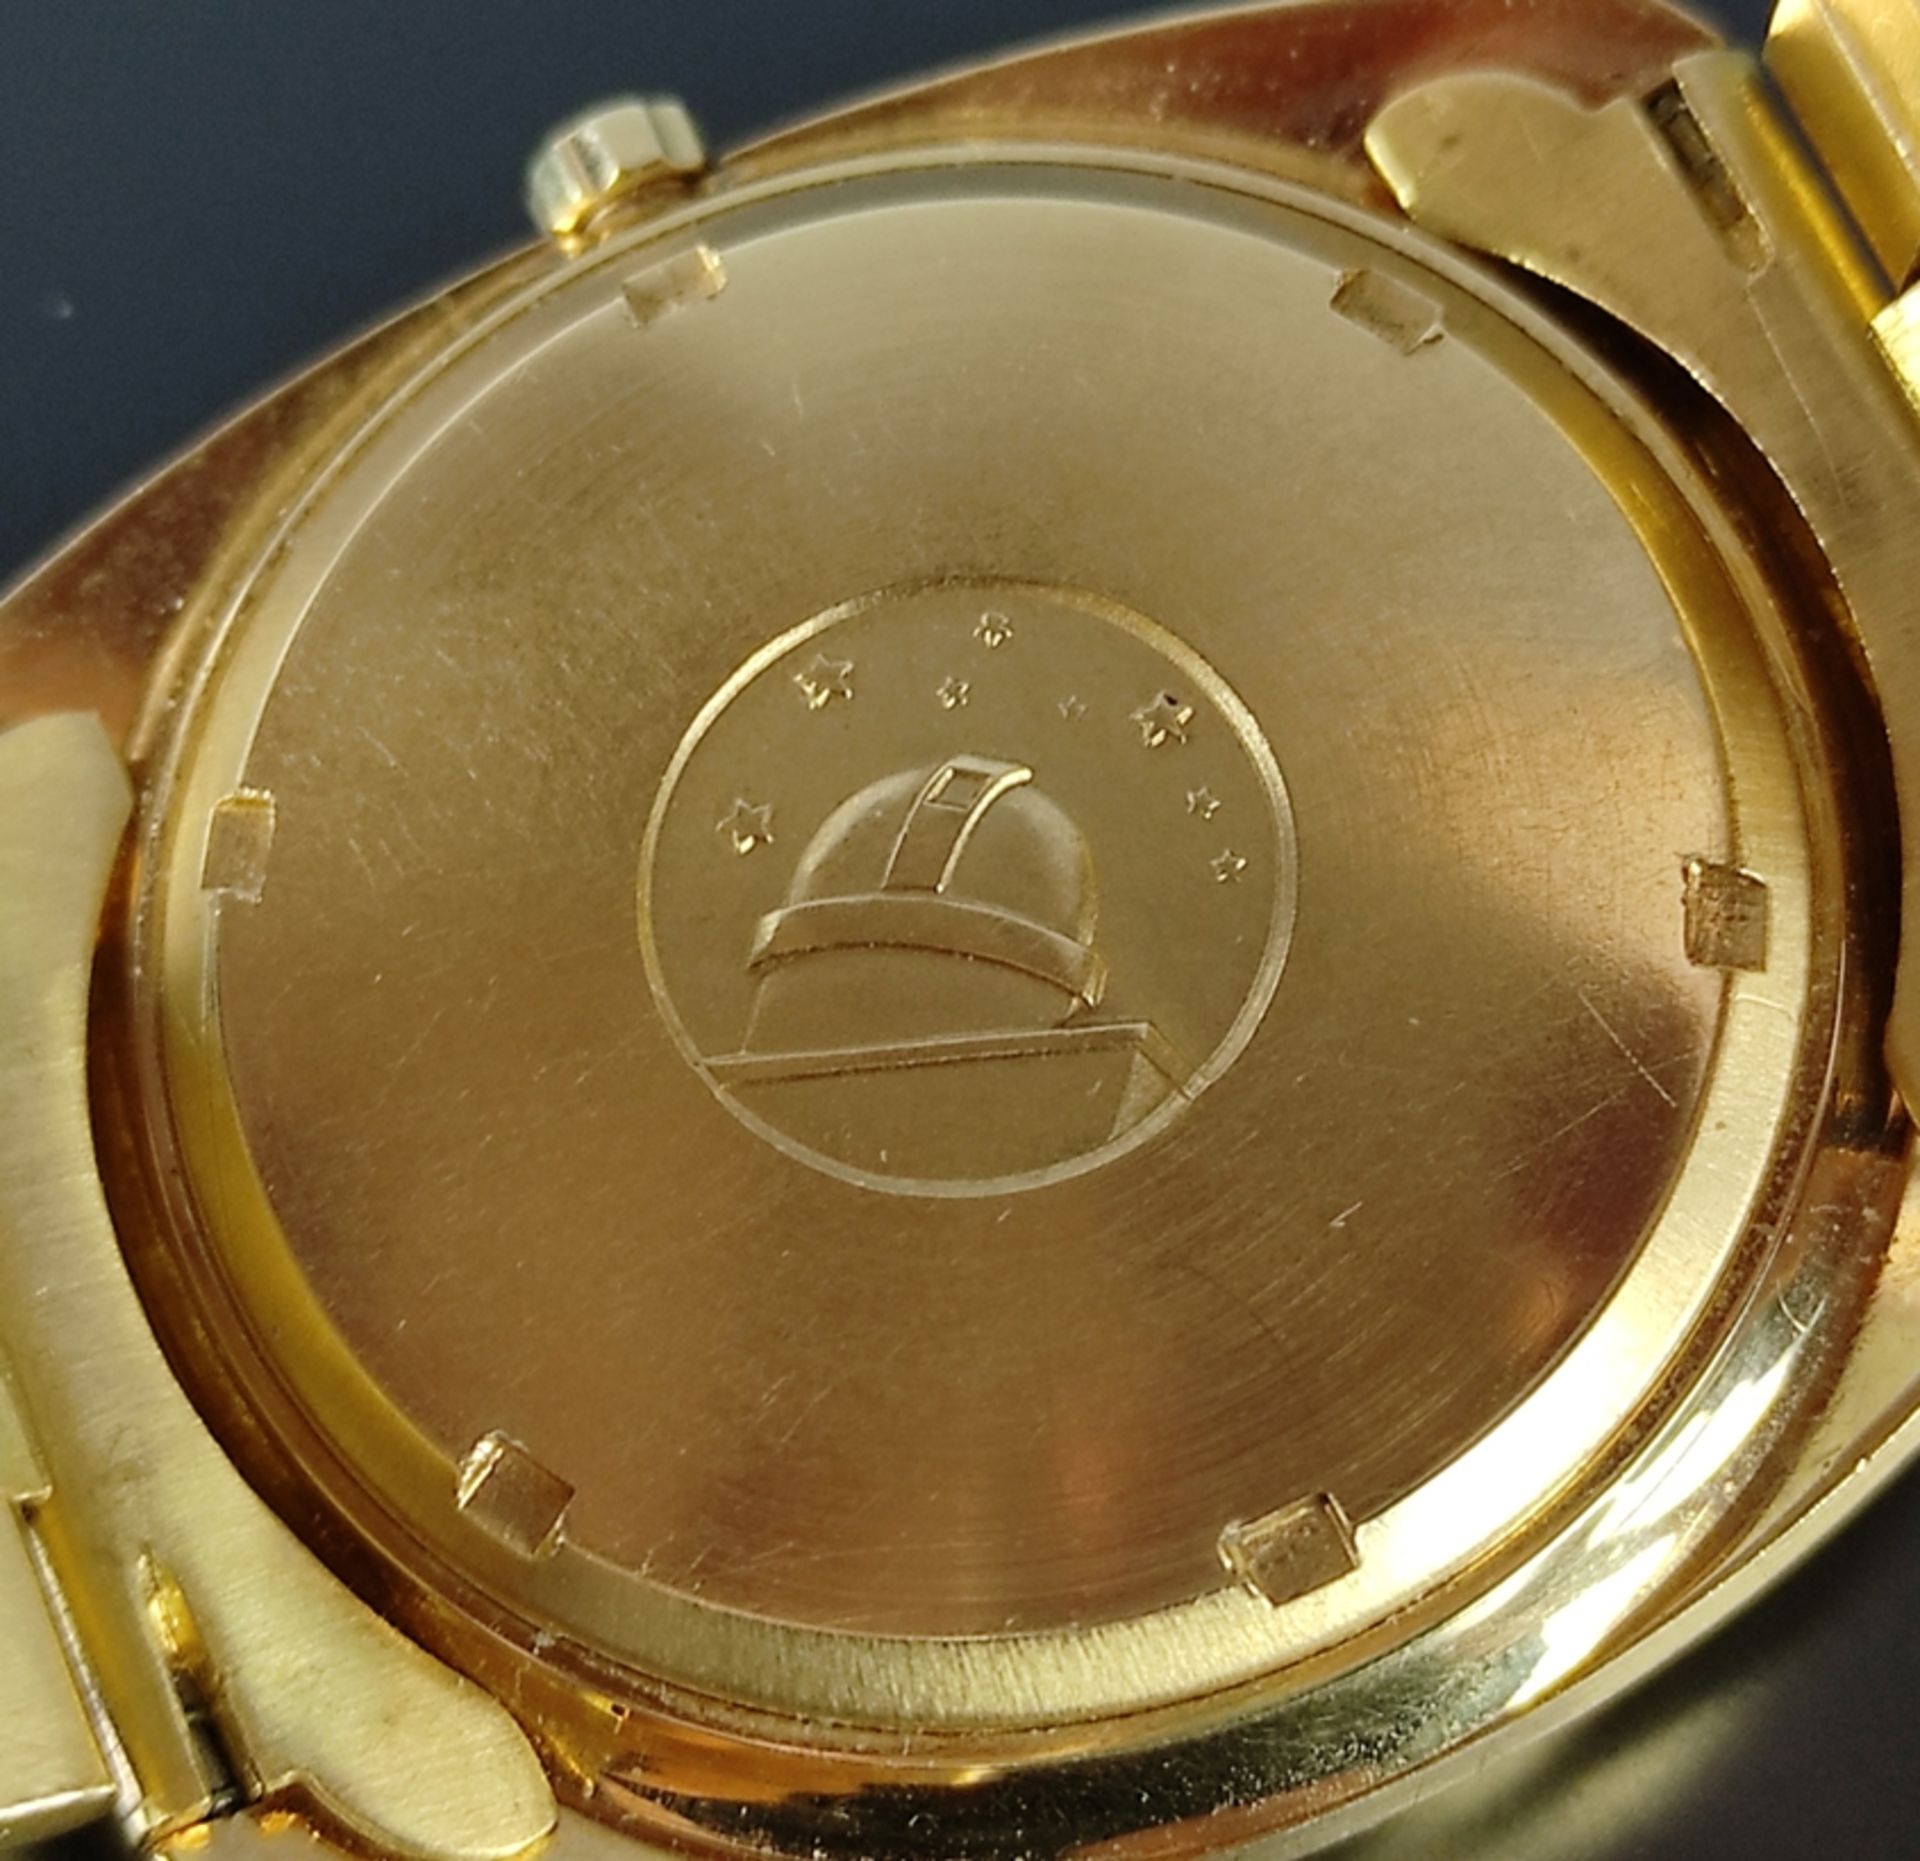 Armbanduhr, Omega Constellation Chronometer, Electronic f 300 Hz, Gehäuse 38mm, Kuppel-Plexiglas, 7 - Bild 4 aus 4